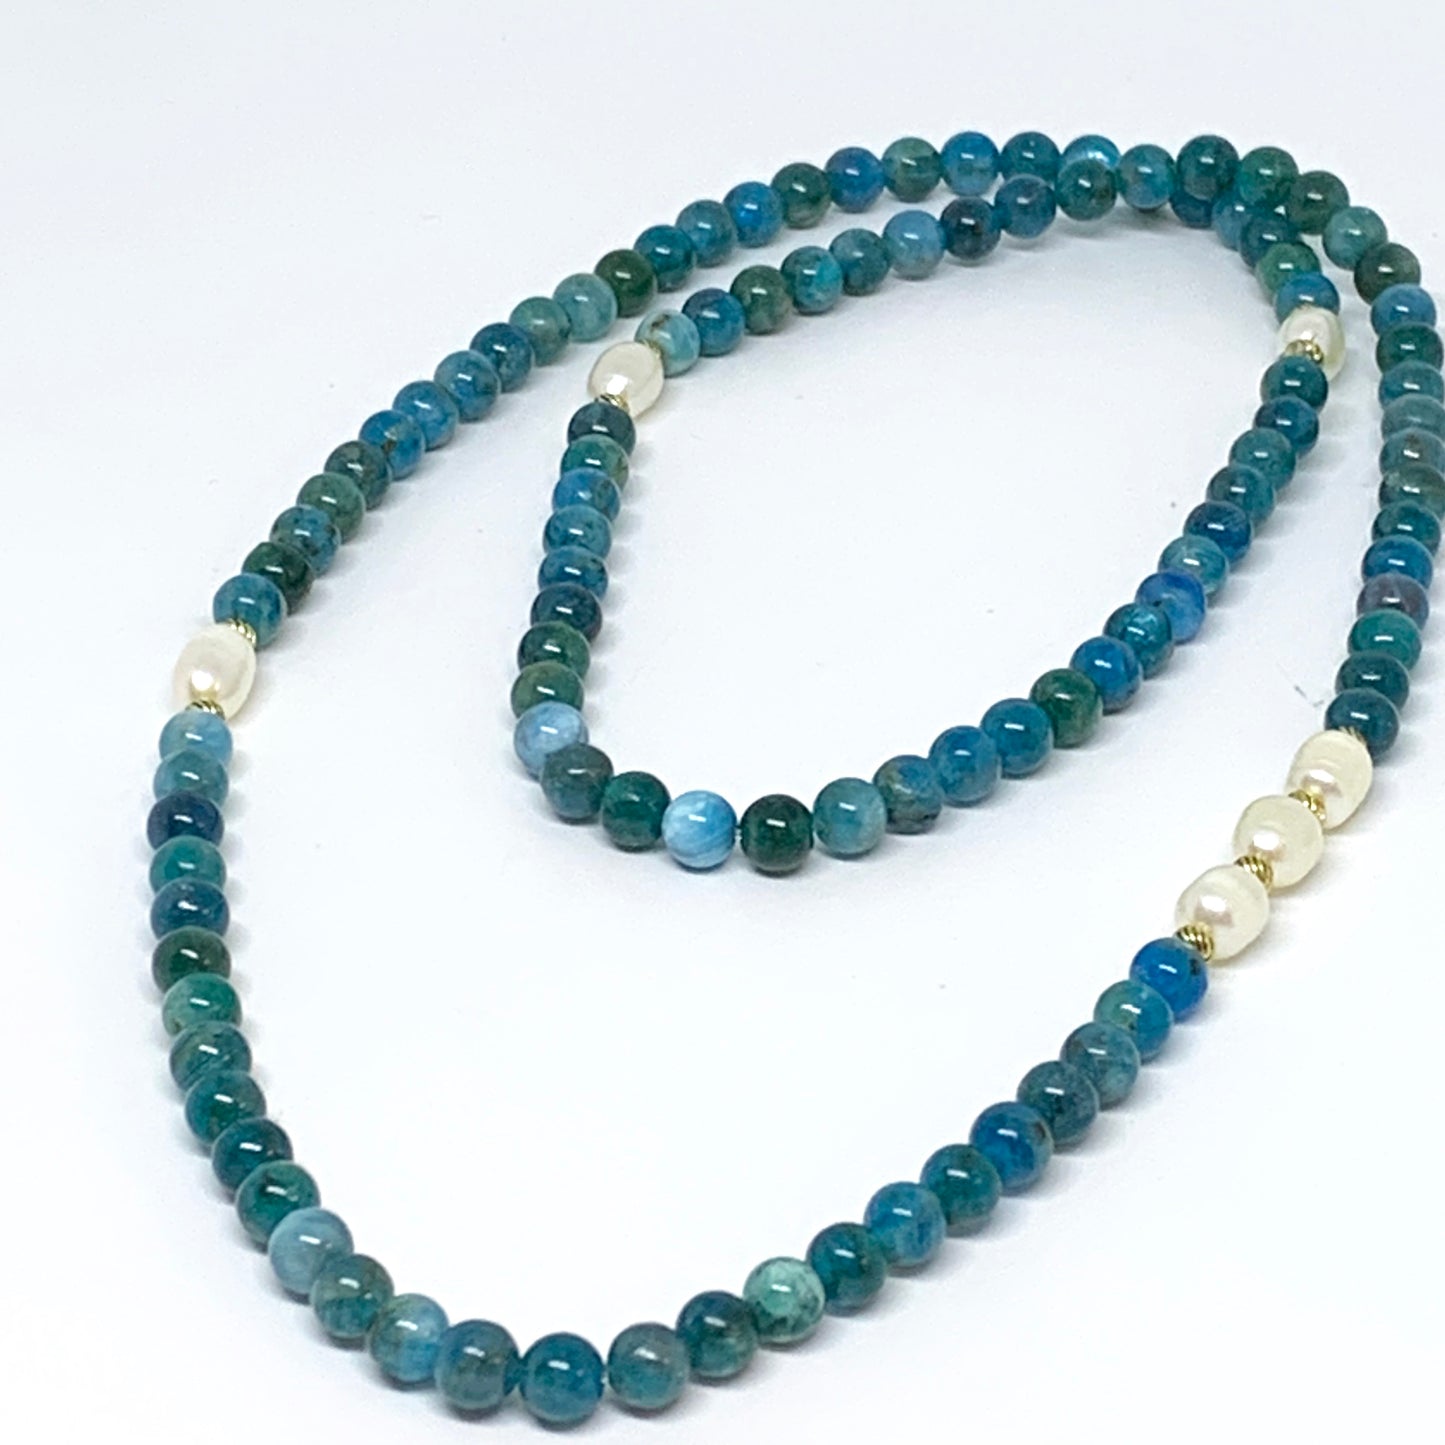 AuraFosa 108 Mala Beads - Apatite Pearl